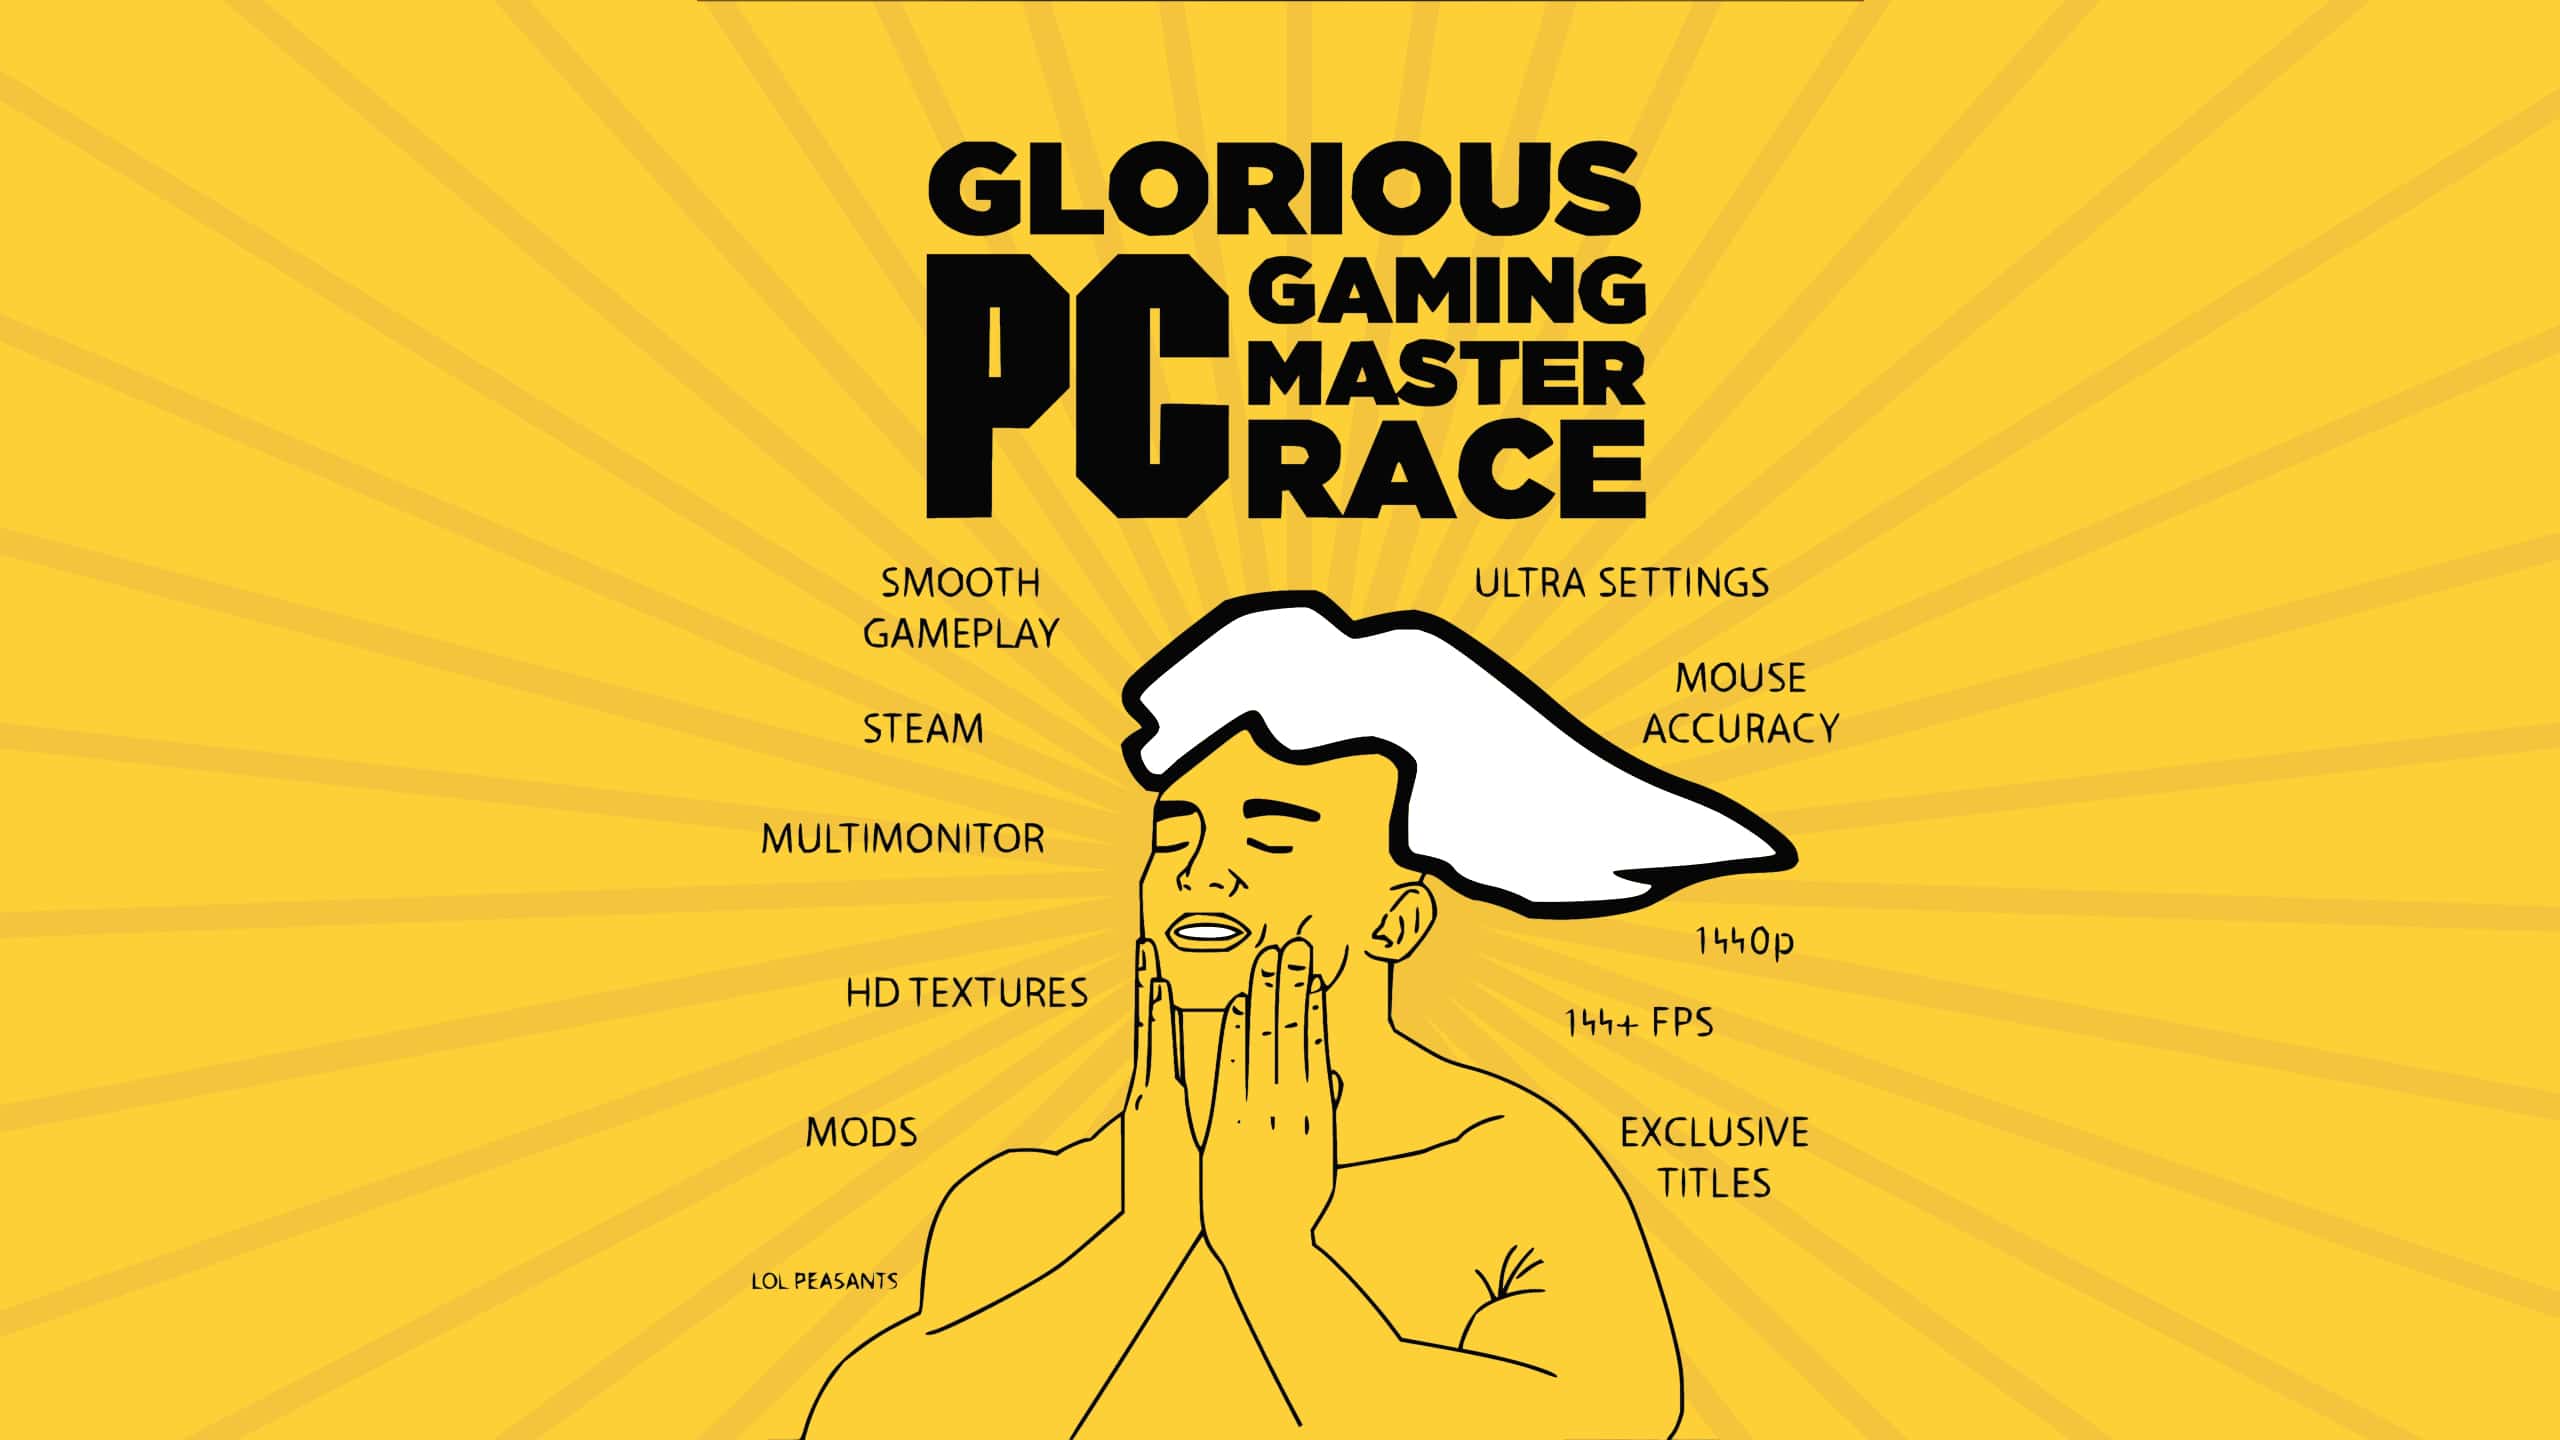 PC Master Race, GamersRD